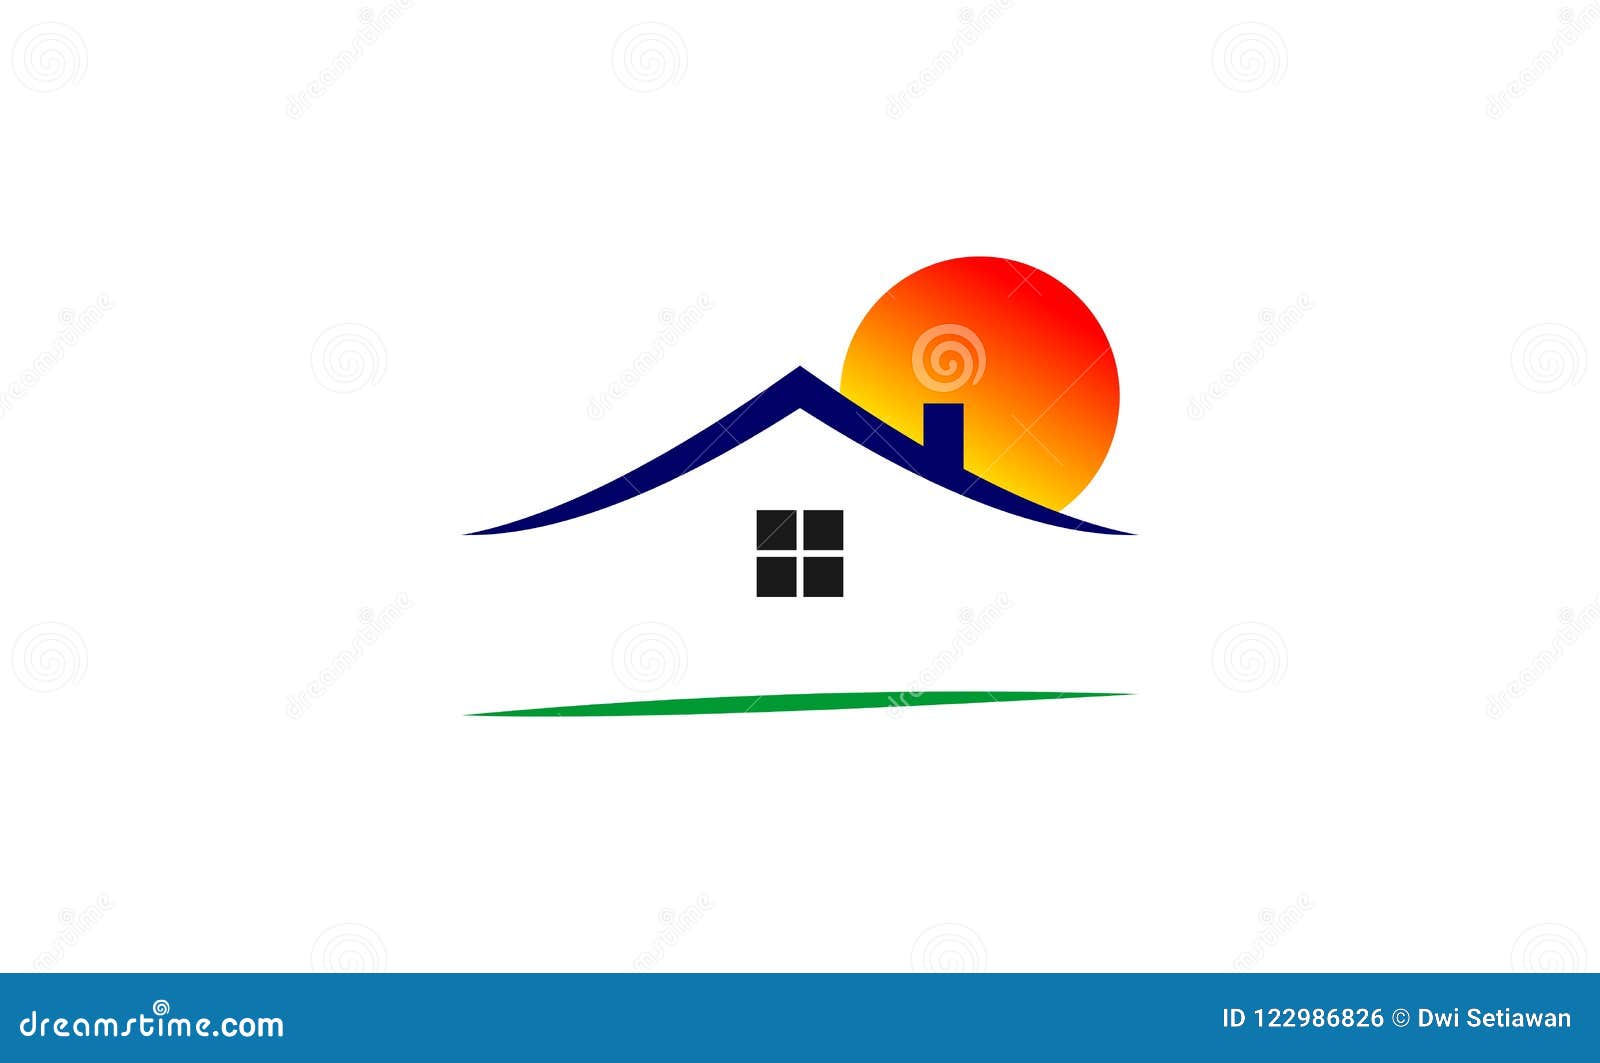 House logo design stock vector. Illustration of creative - 122986826